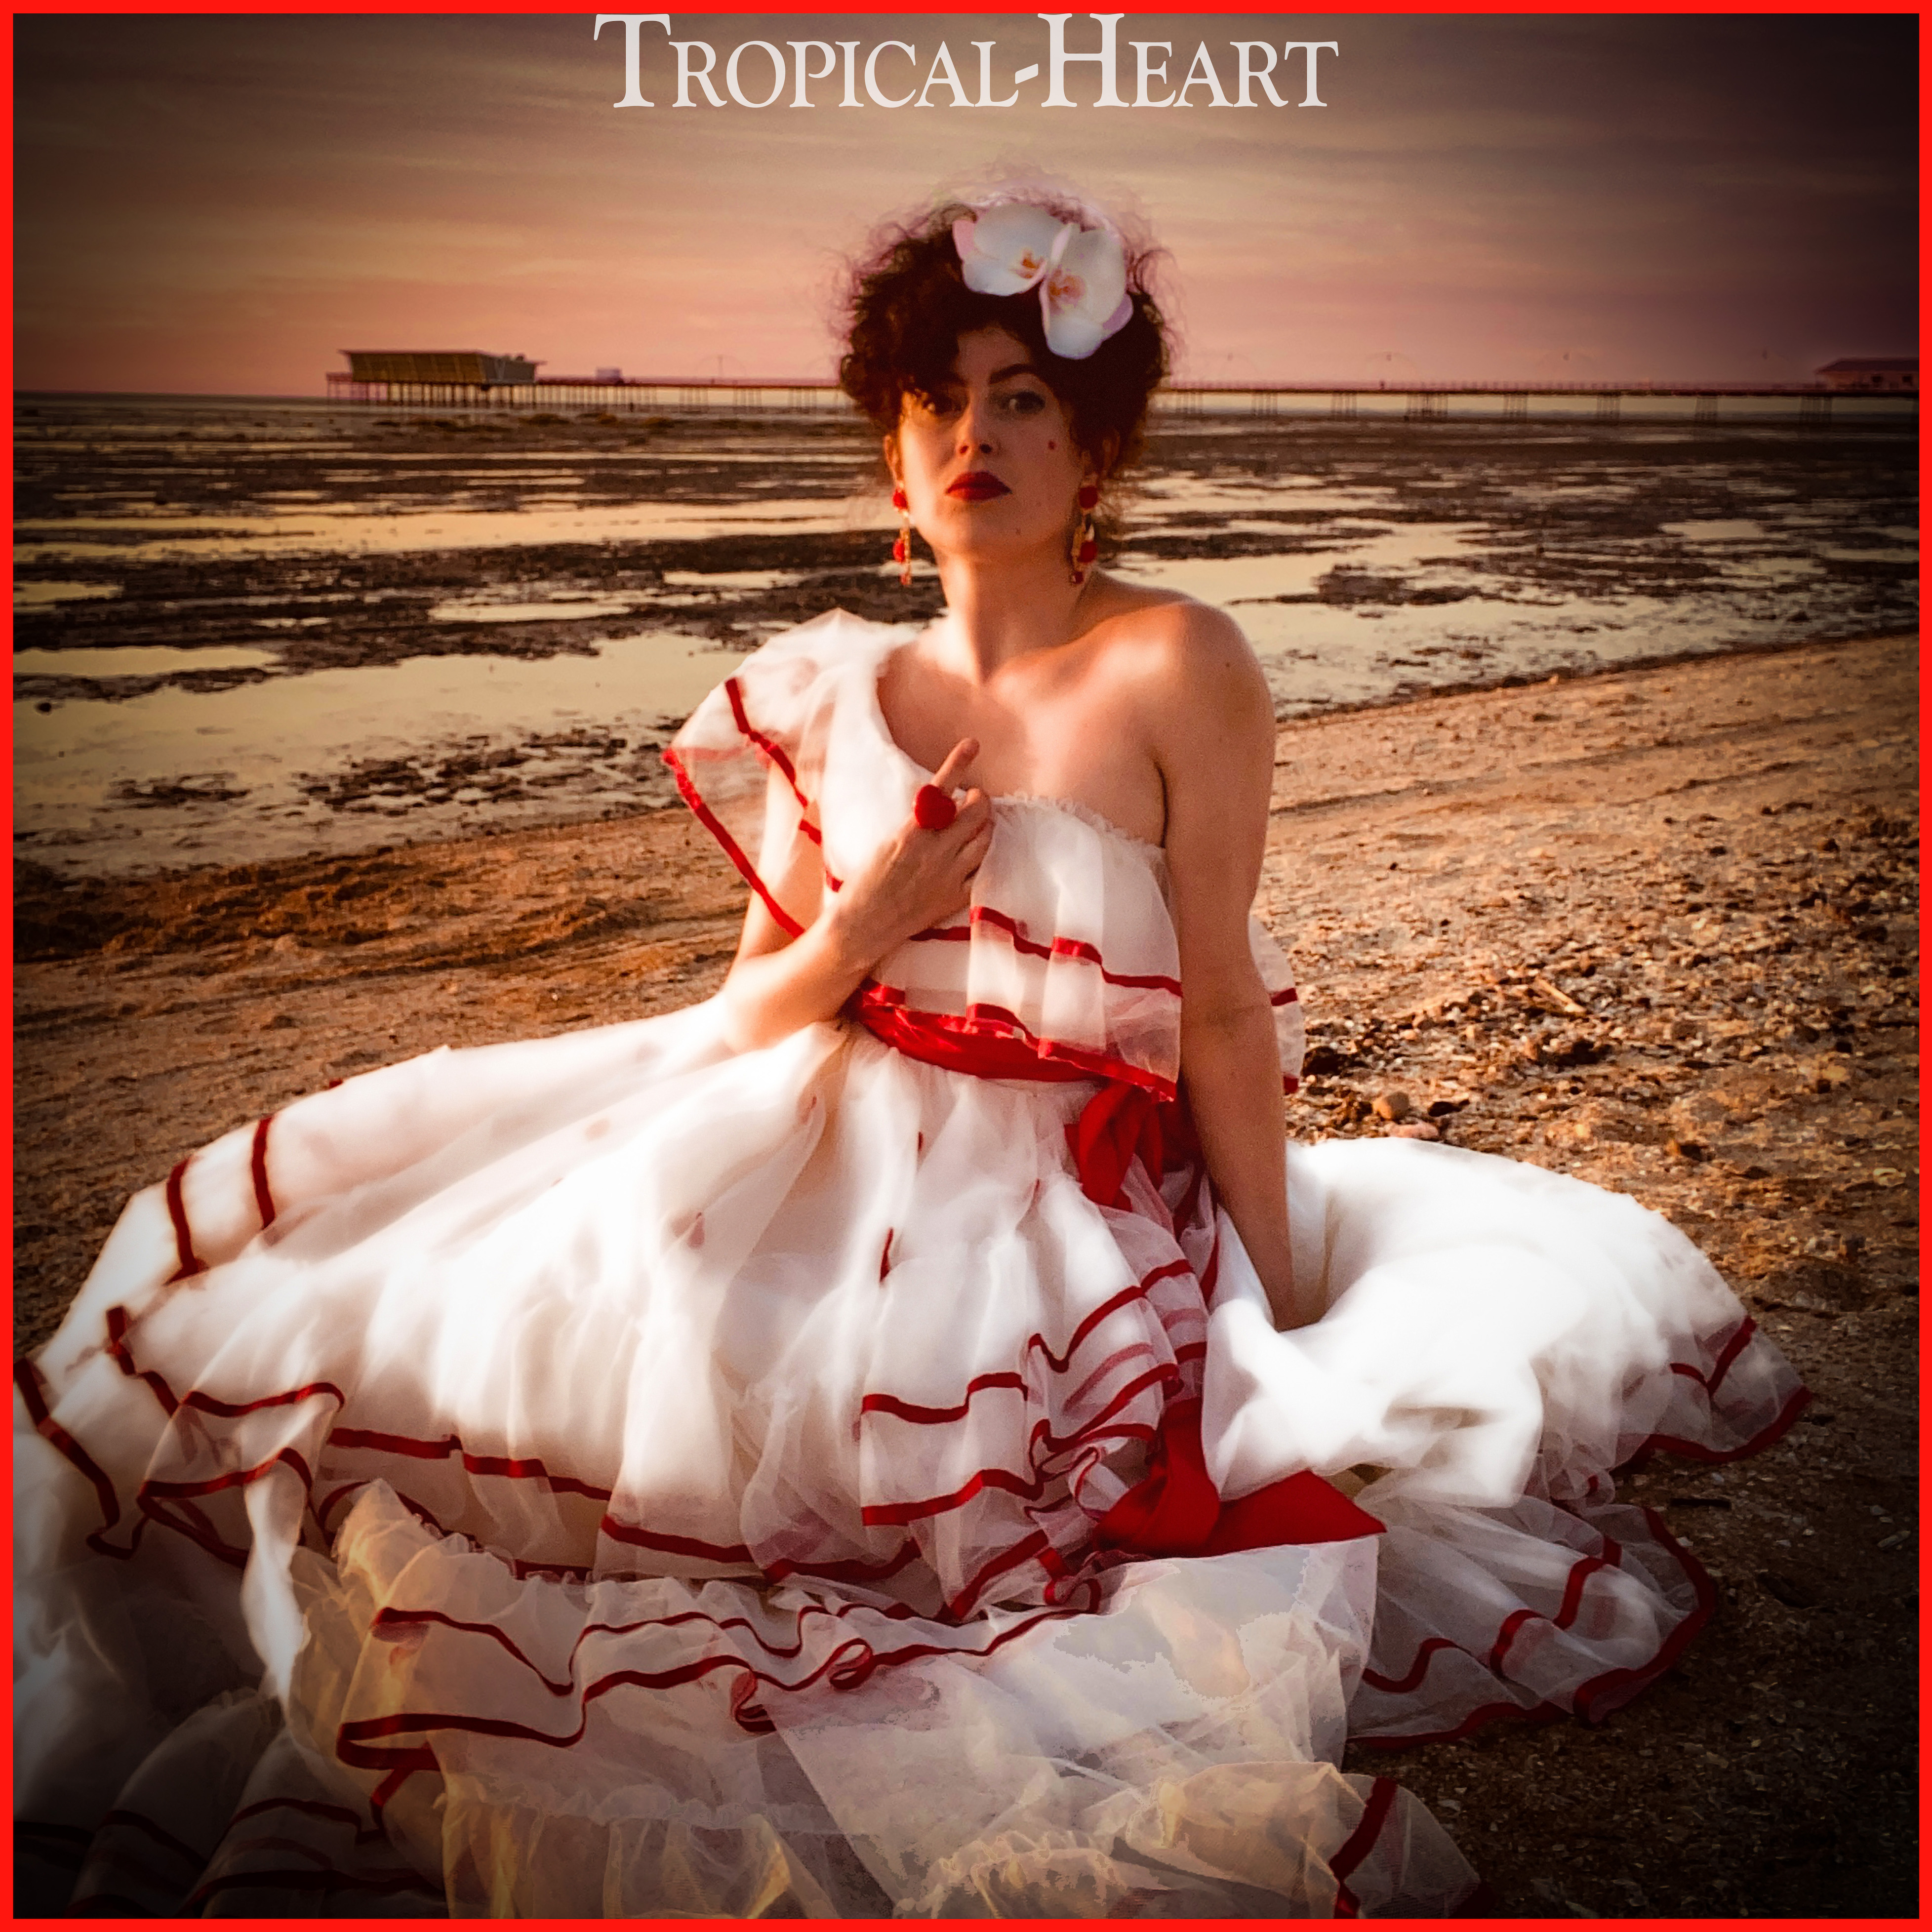 Ruby Tingle – “Tropical Heart”